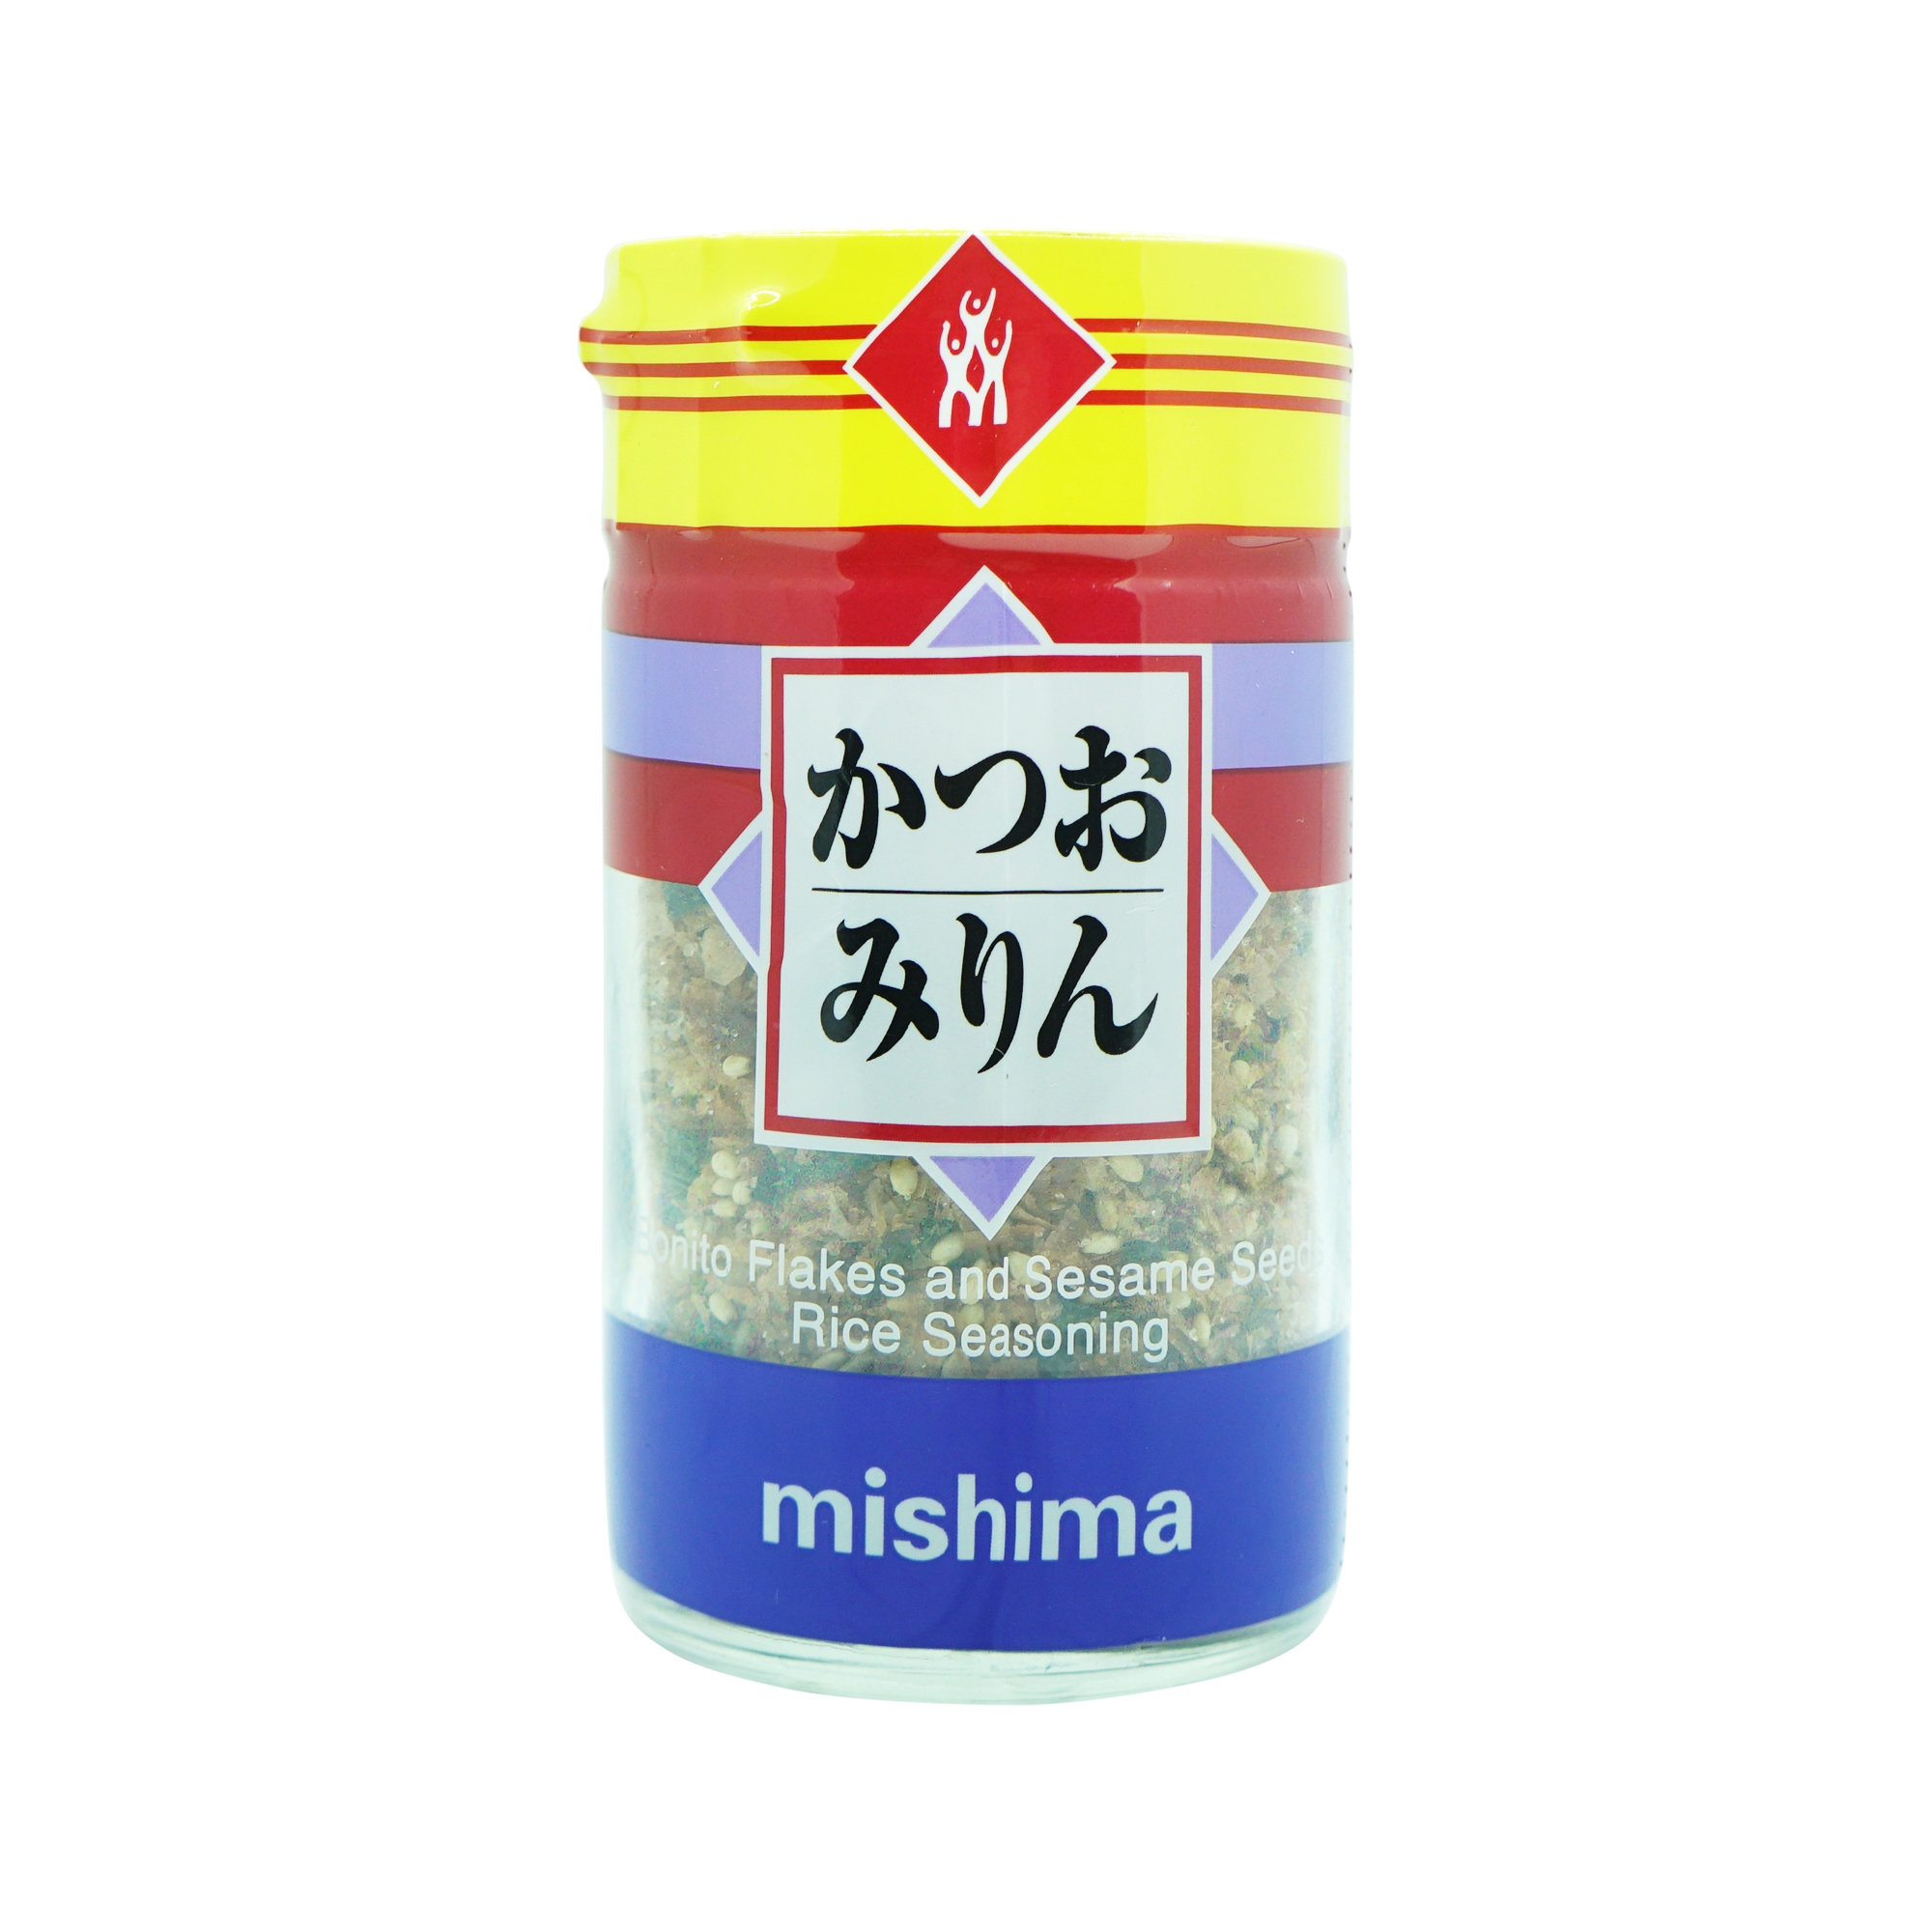 Mishima Dried Fish& Sesame Rice Seasoning 45g